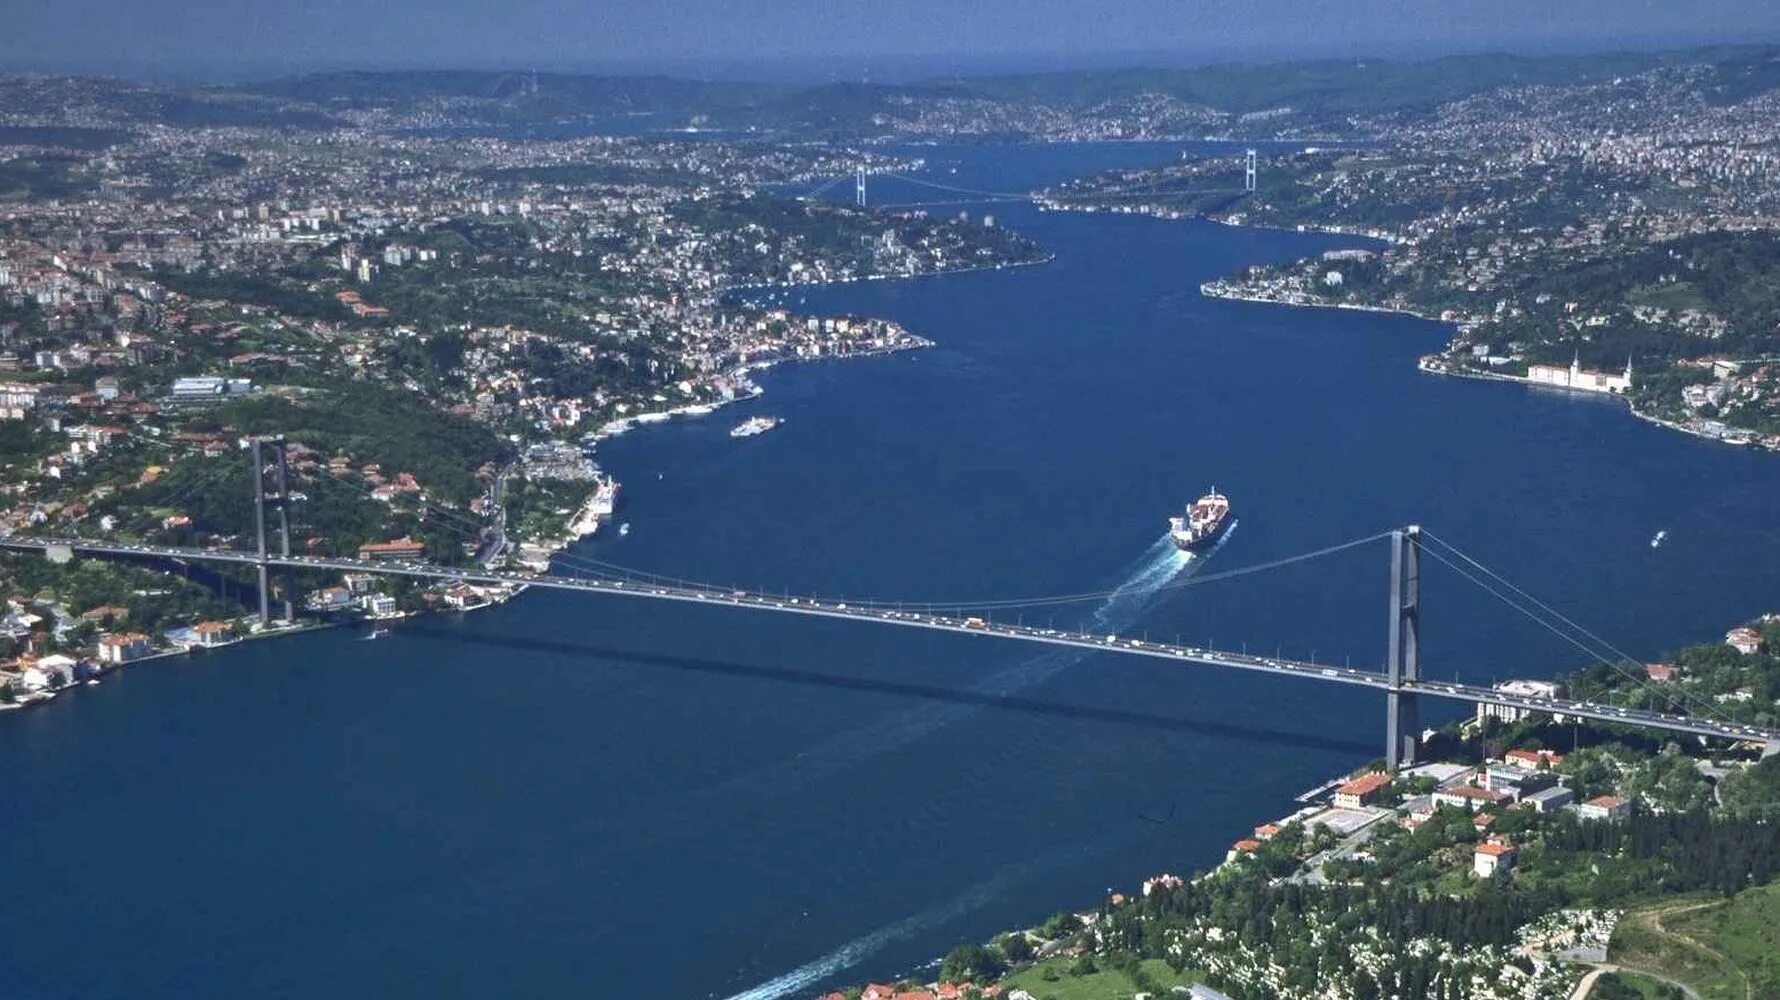 Пролив босфор океан. Стамбул пролив Босфор. Турция Стамбул Босфорский пролив. Мраморное море пролив Босфор. Мост в проливе Босфор и Дарданеллы.